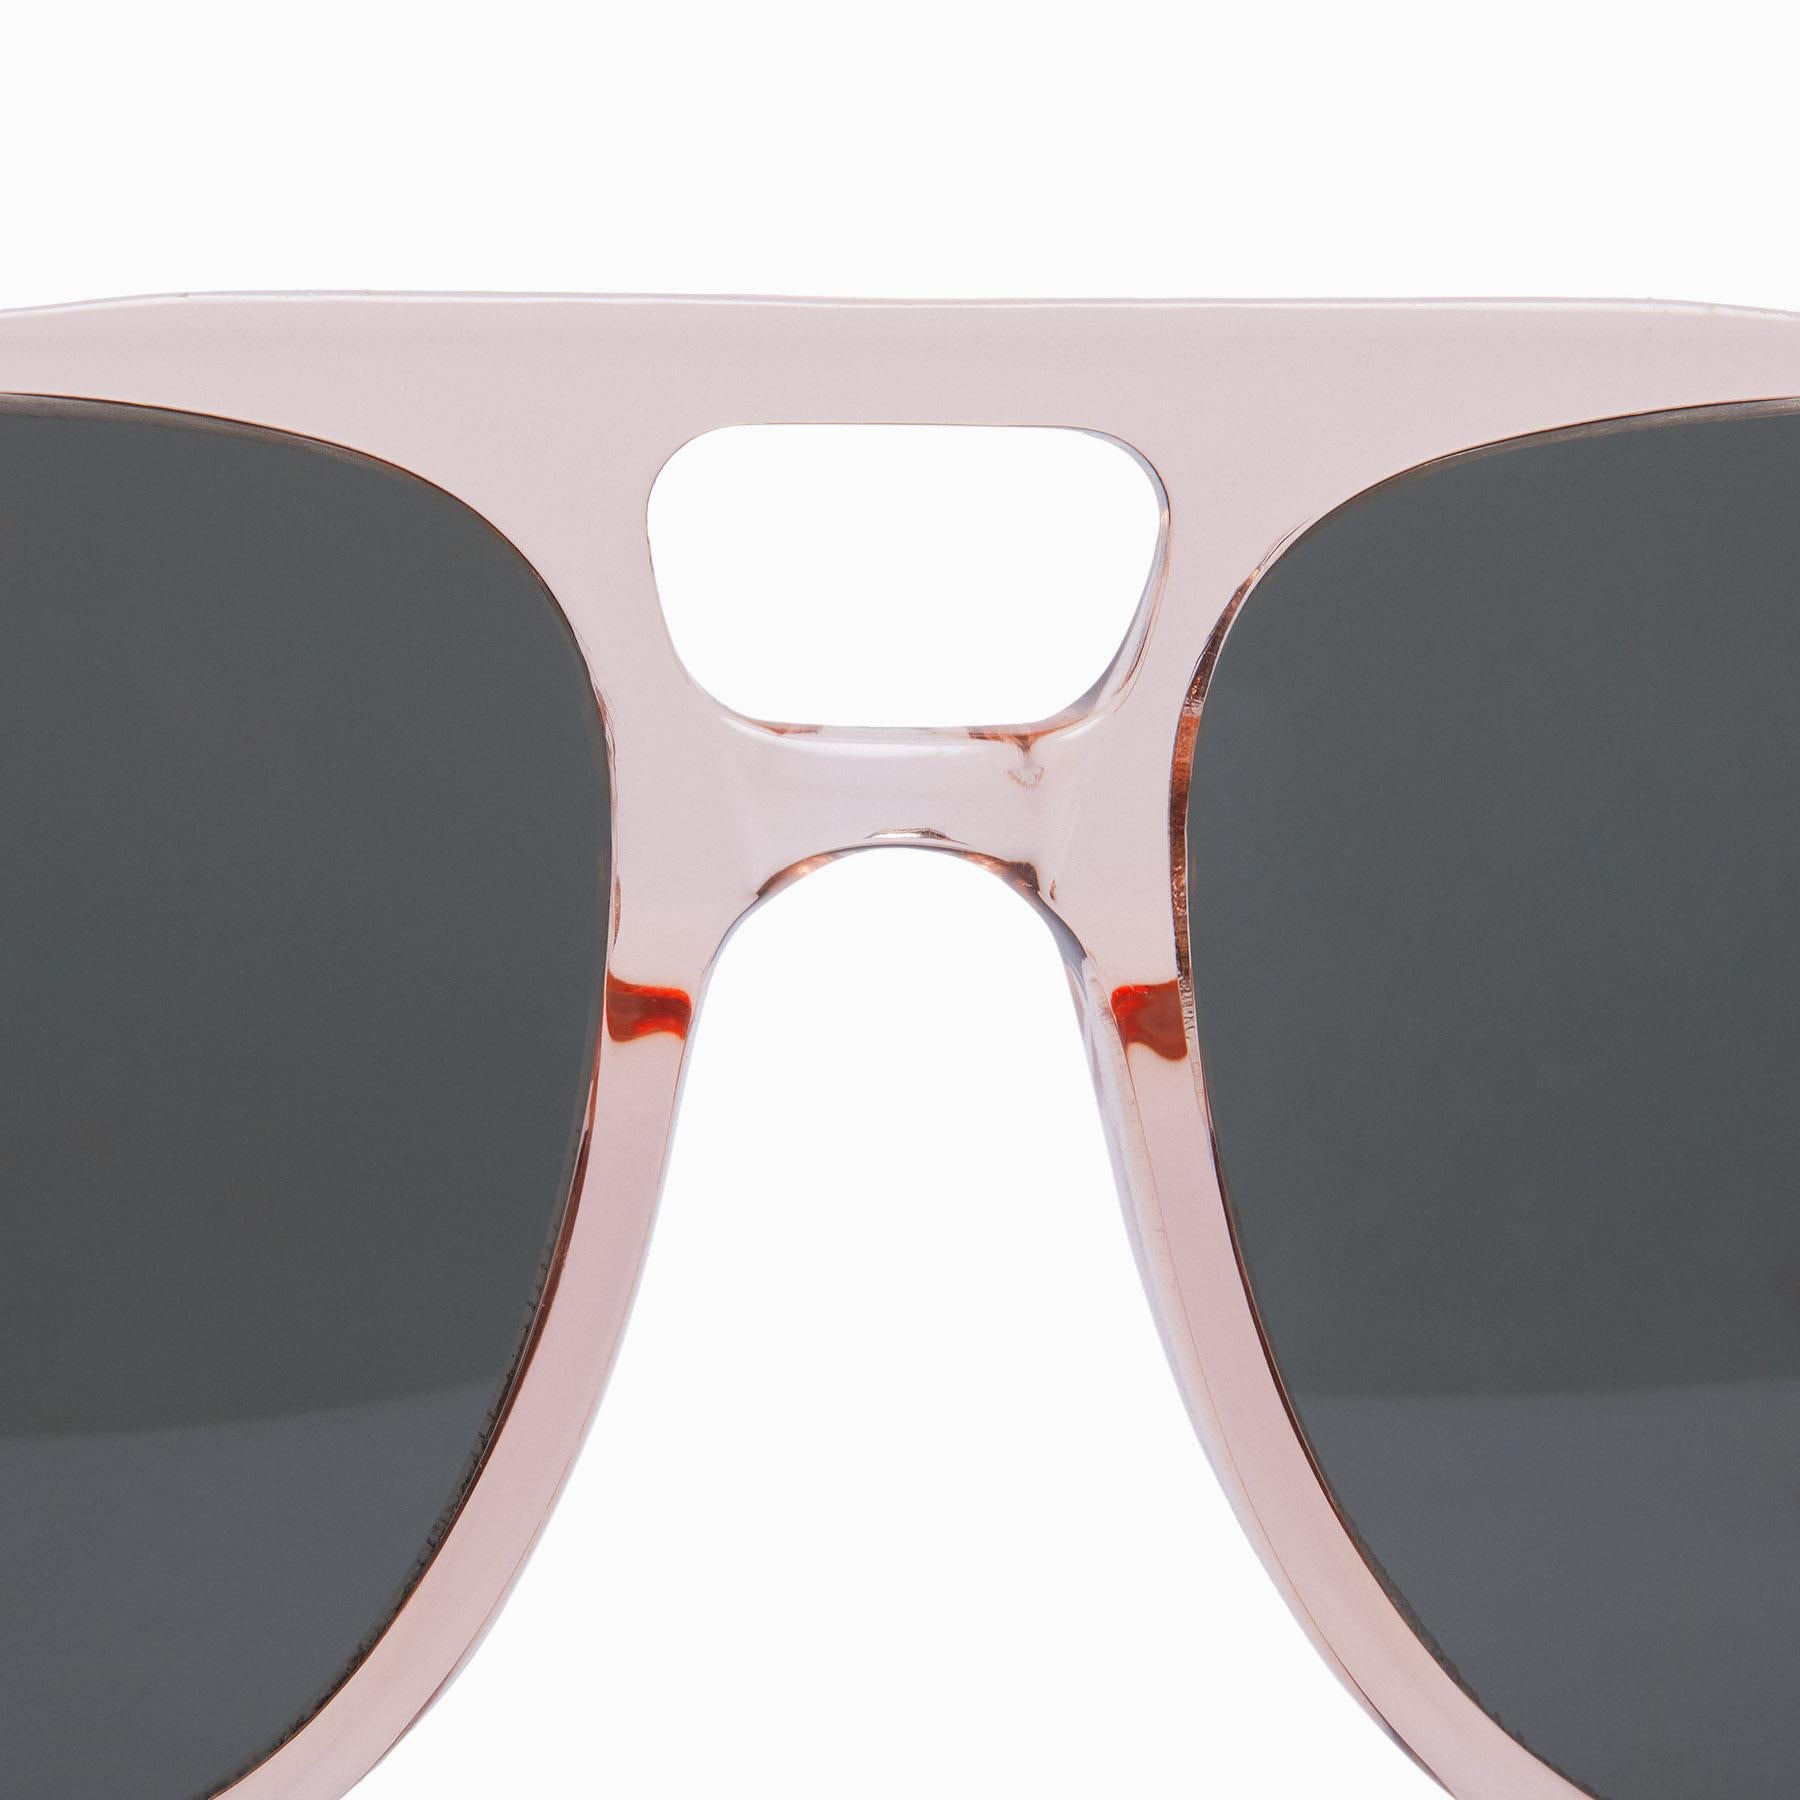 Blush Round Bridge Sunglasses